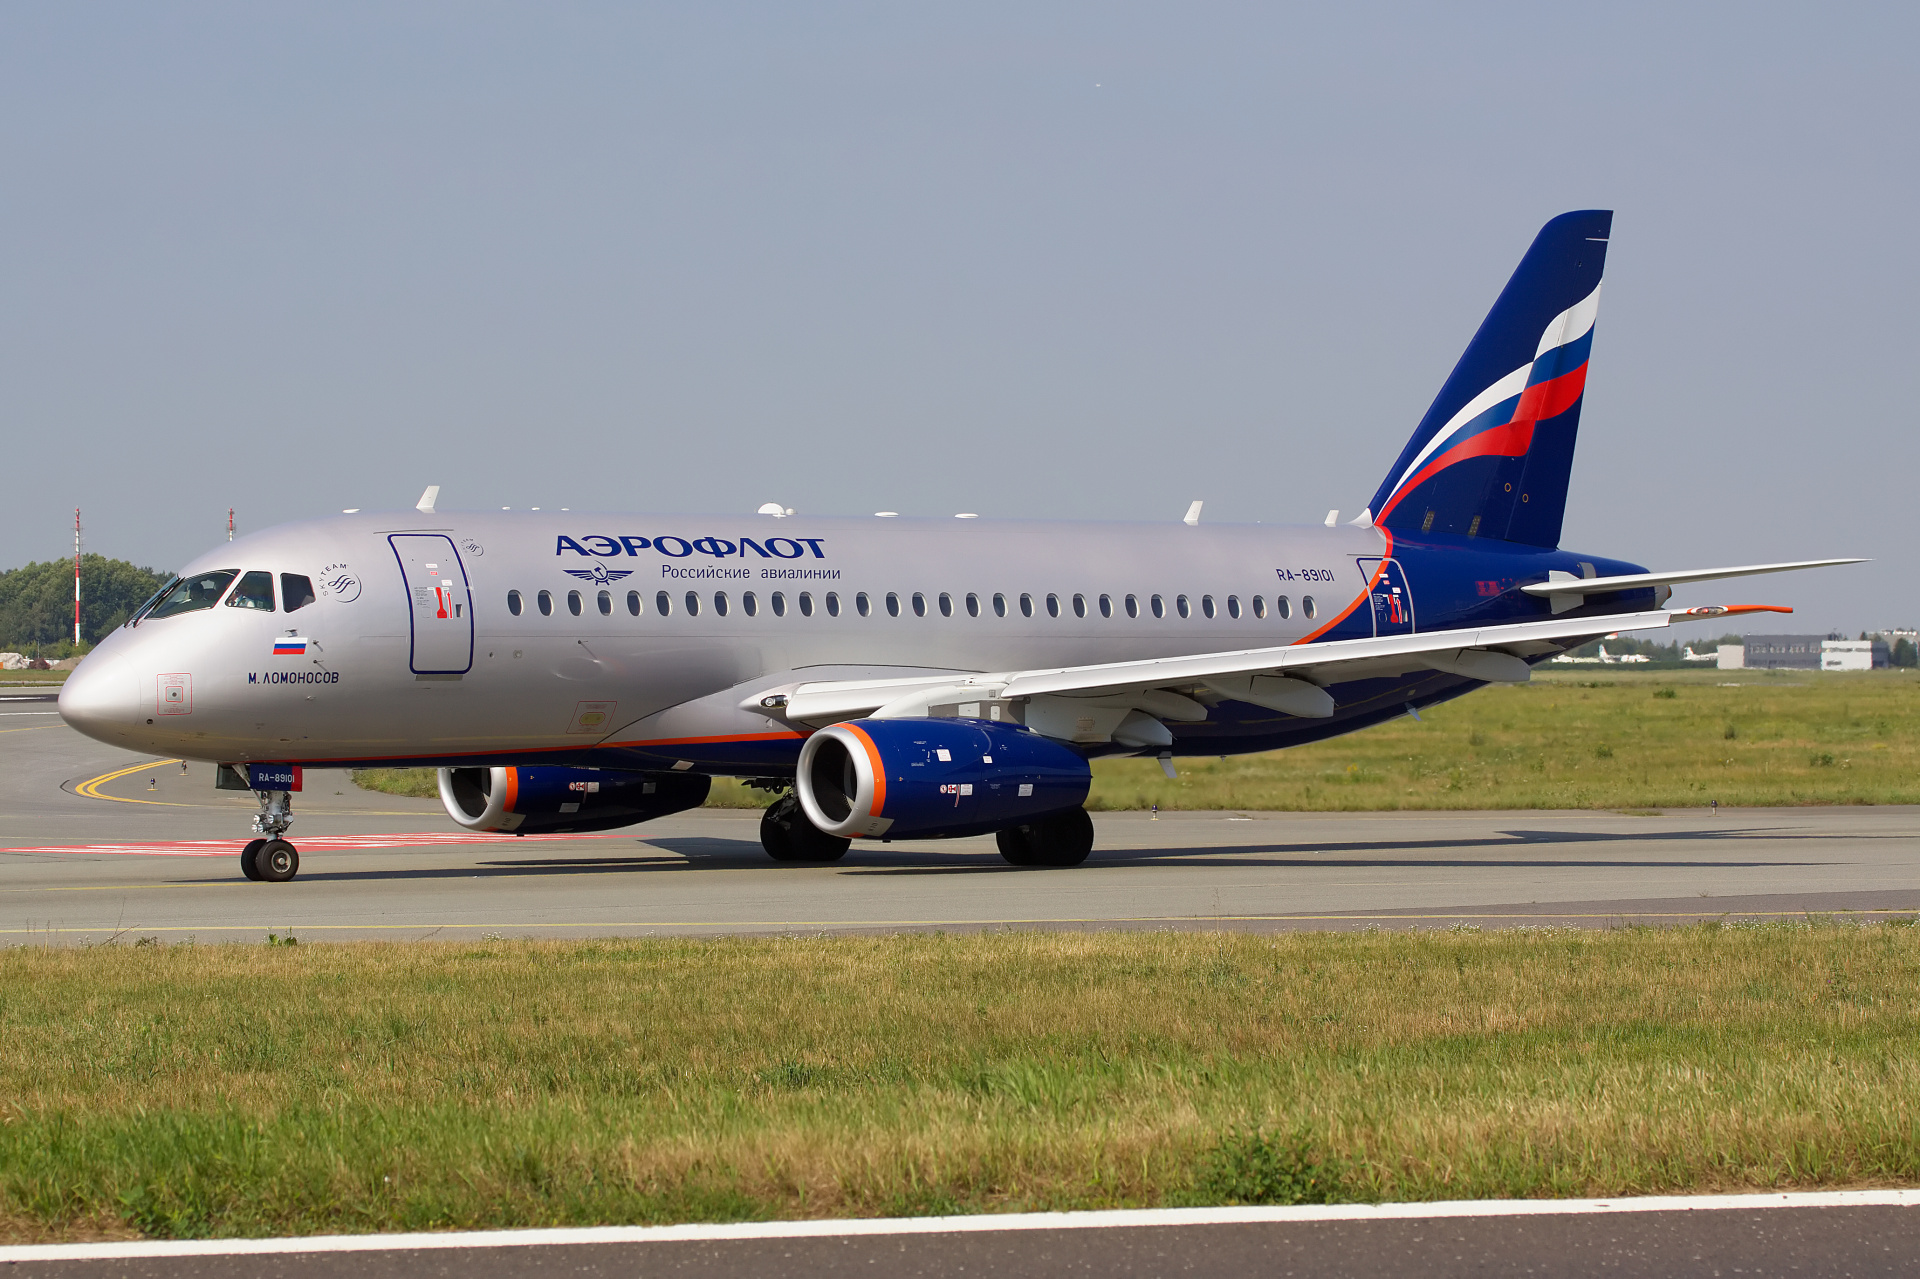 RA-89101 (Aircraft » EPWA Spotting » Sukhoi Superjet 100-95B » Aeroflot Russian Airlines)